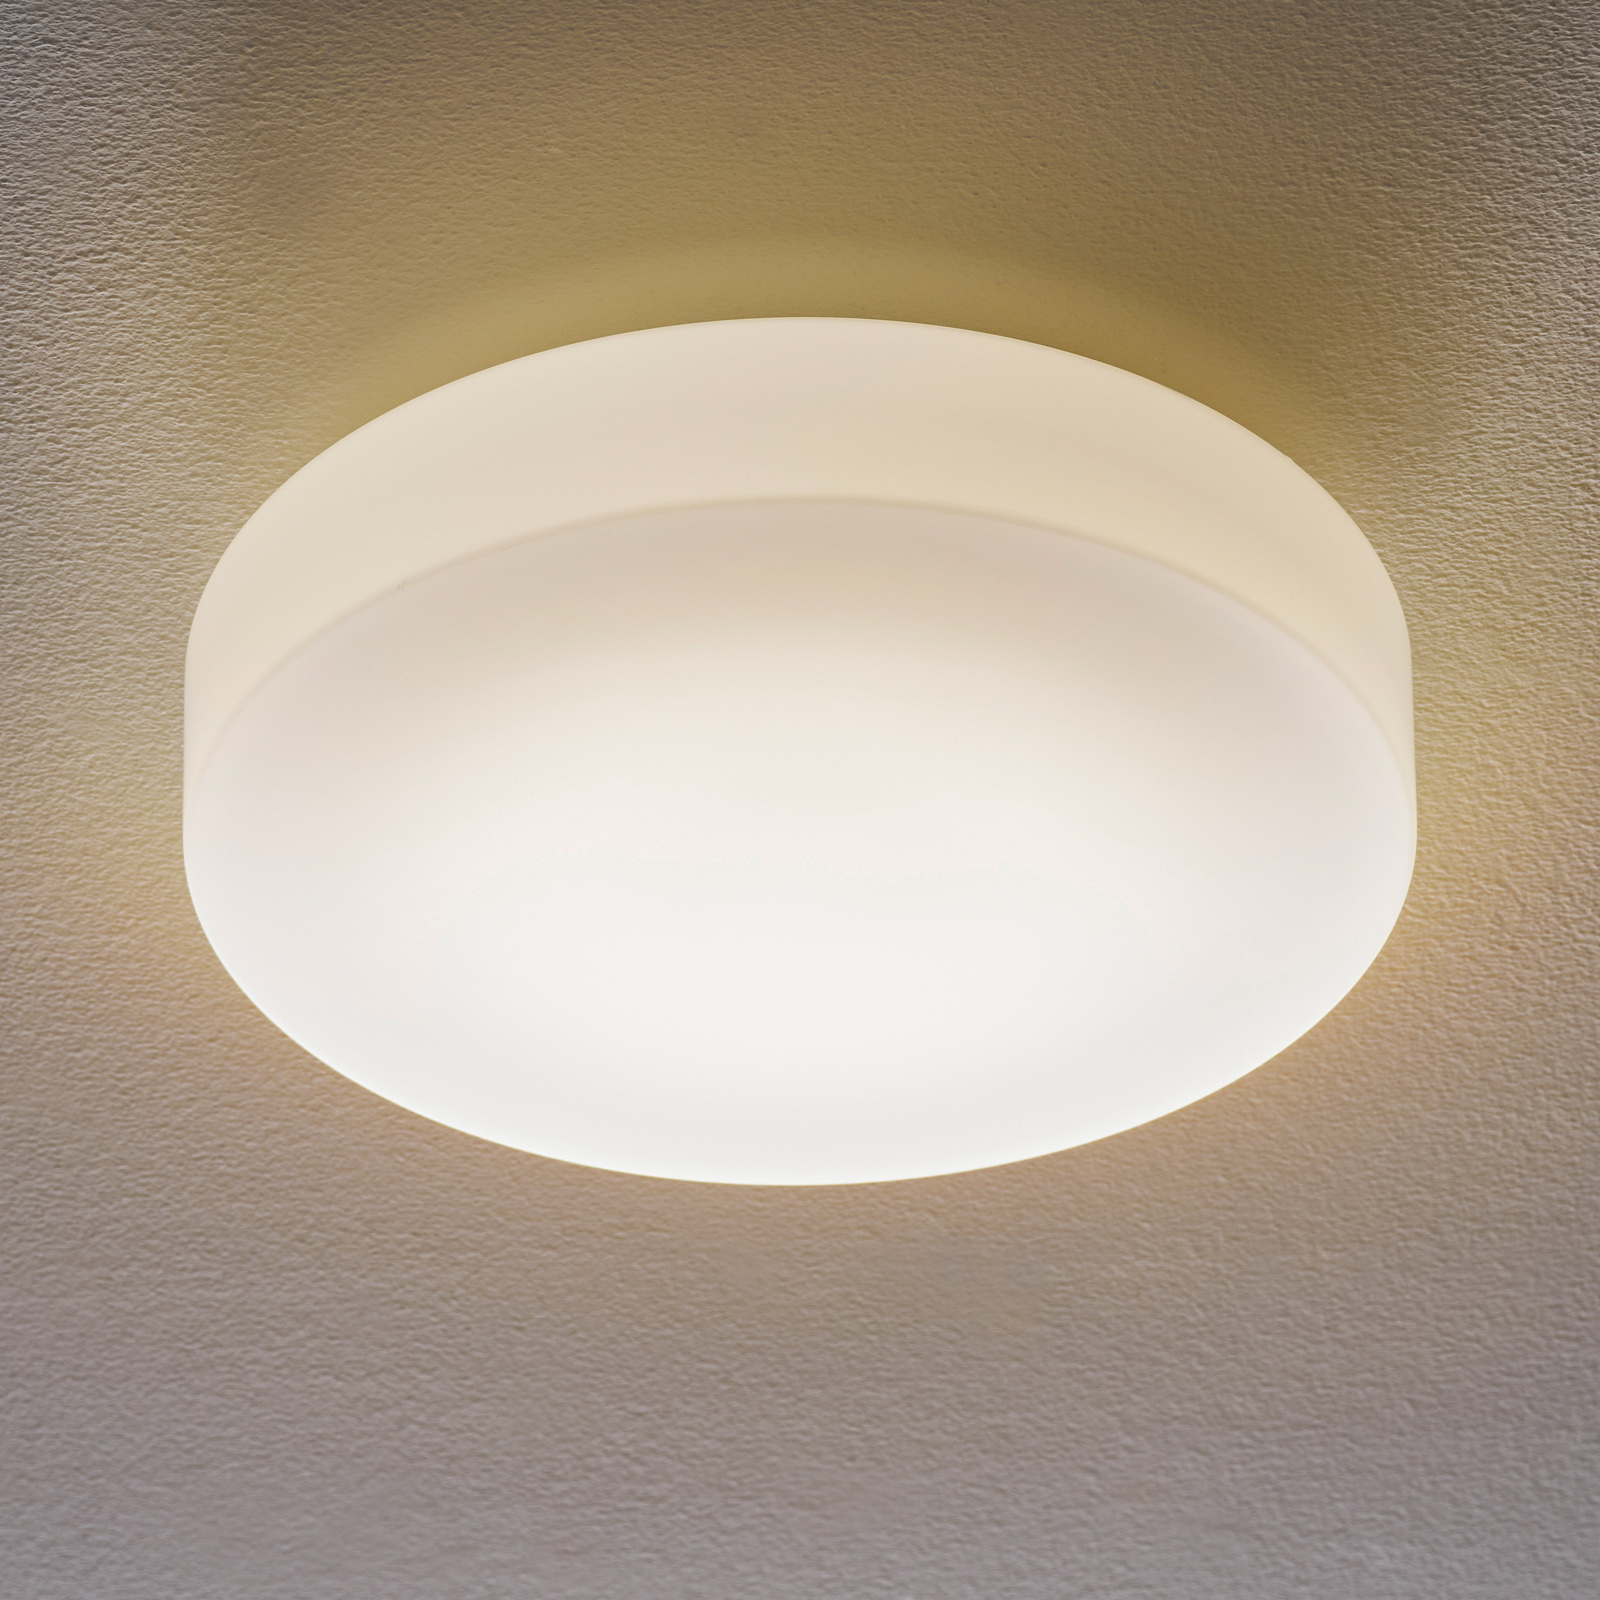 BEGA 50651 lampa sufitowa LED szkło opalowe Ø34cm